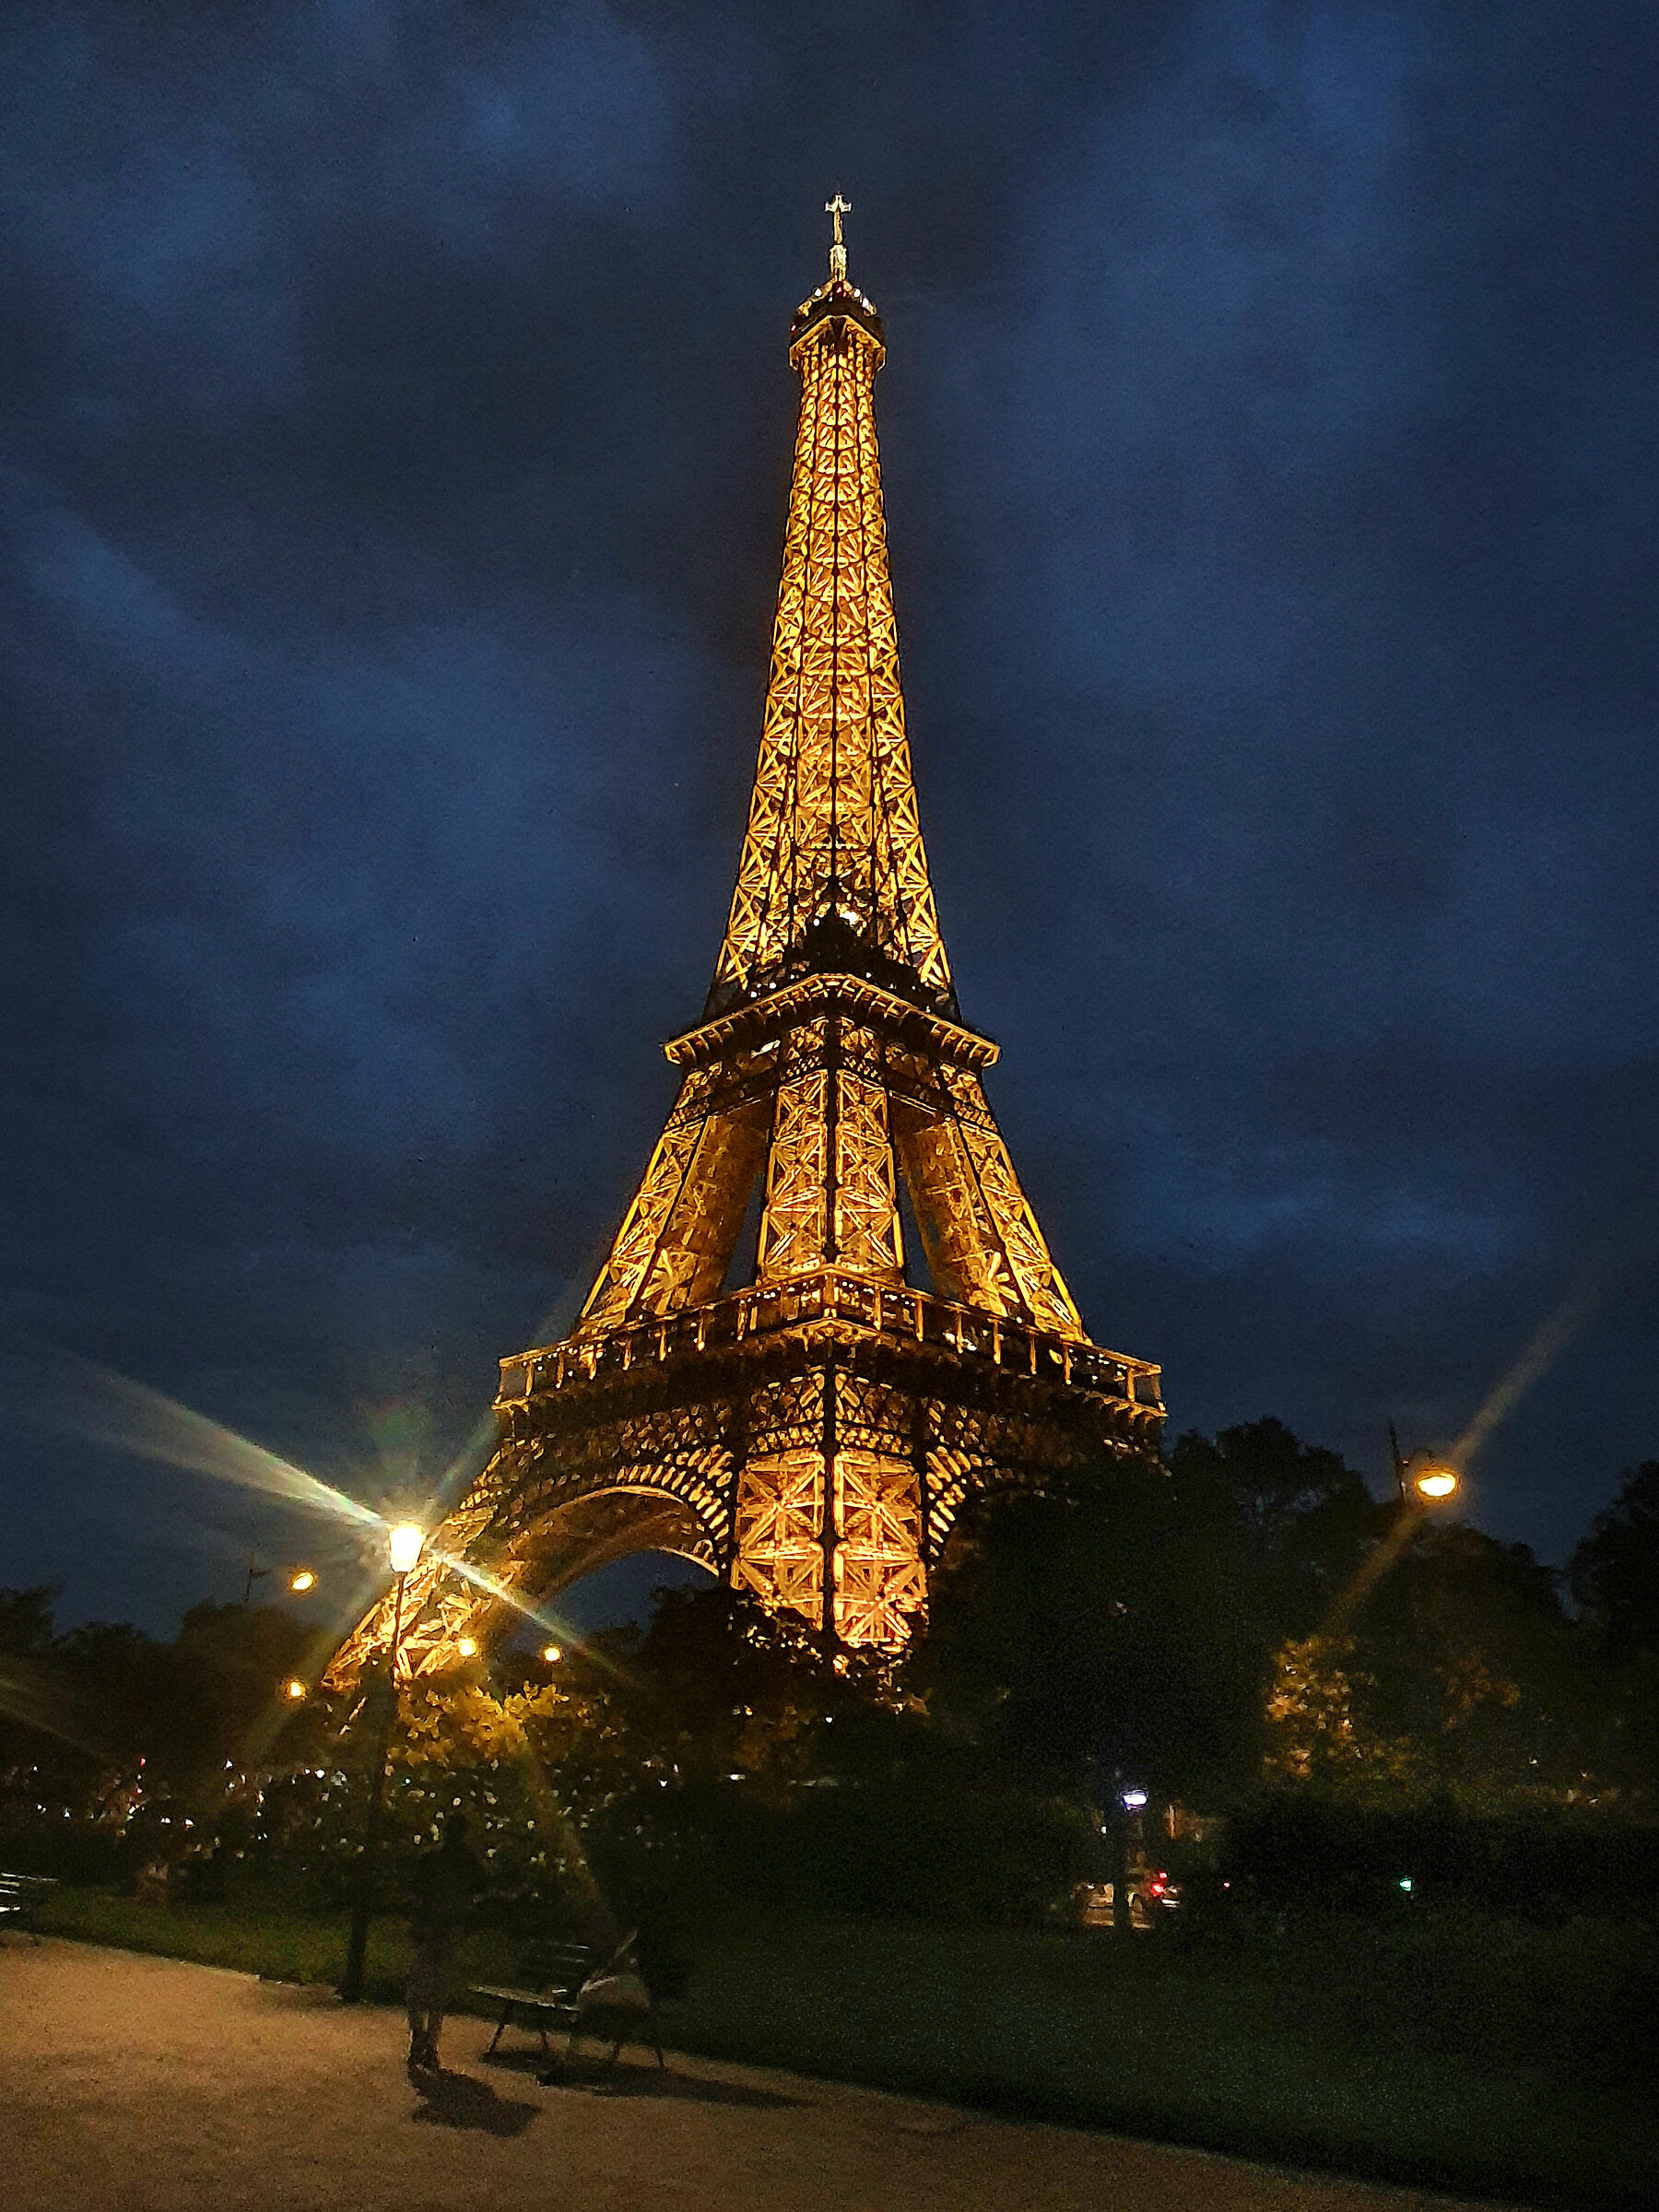 Among the lights of Paris...